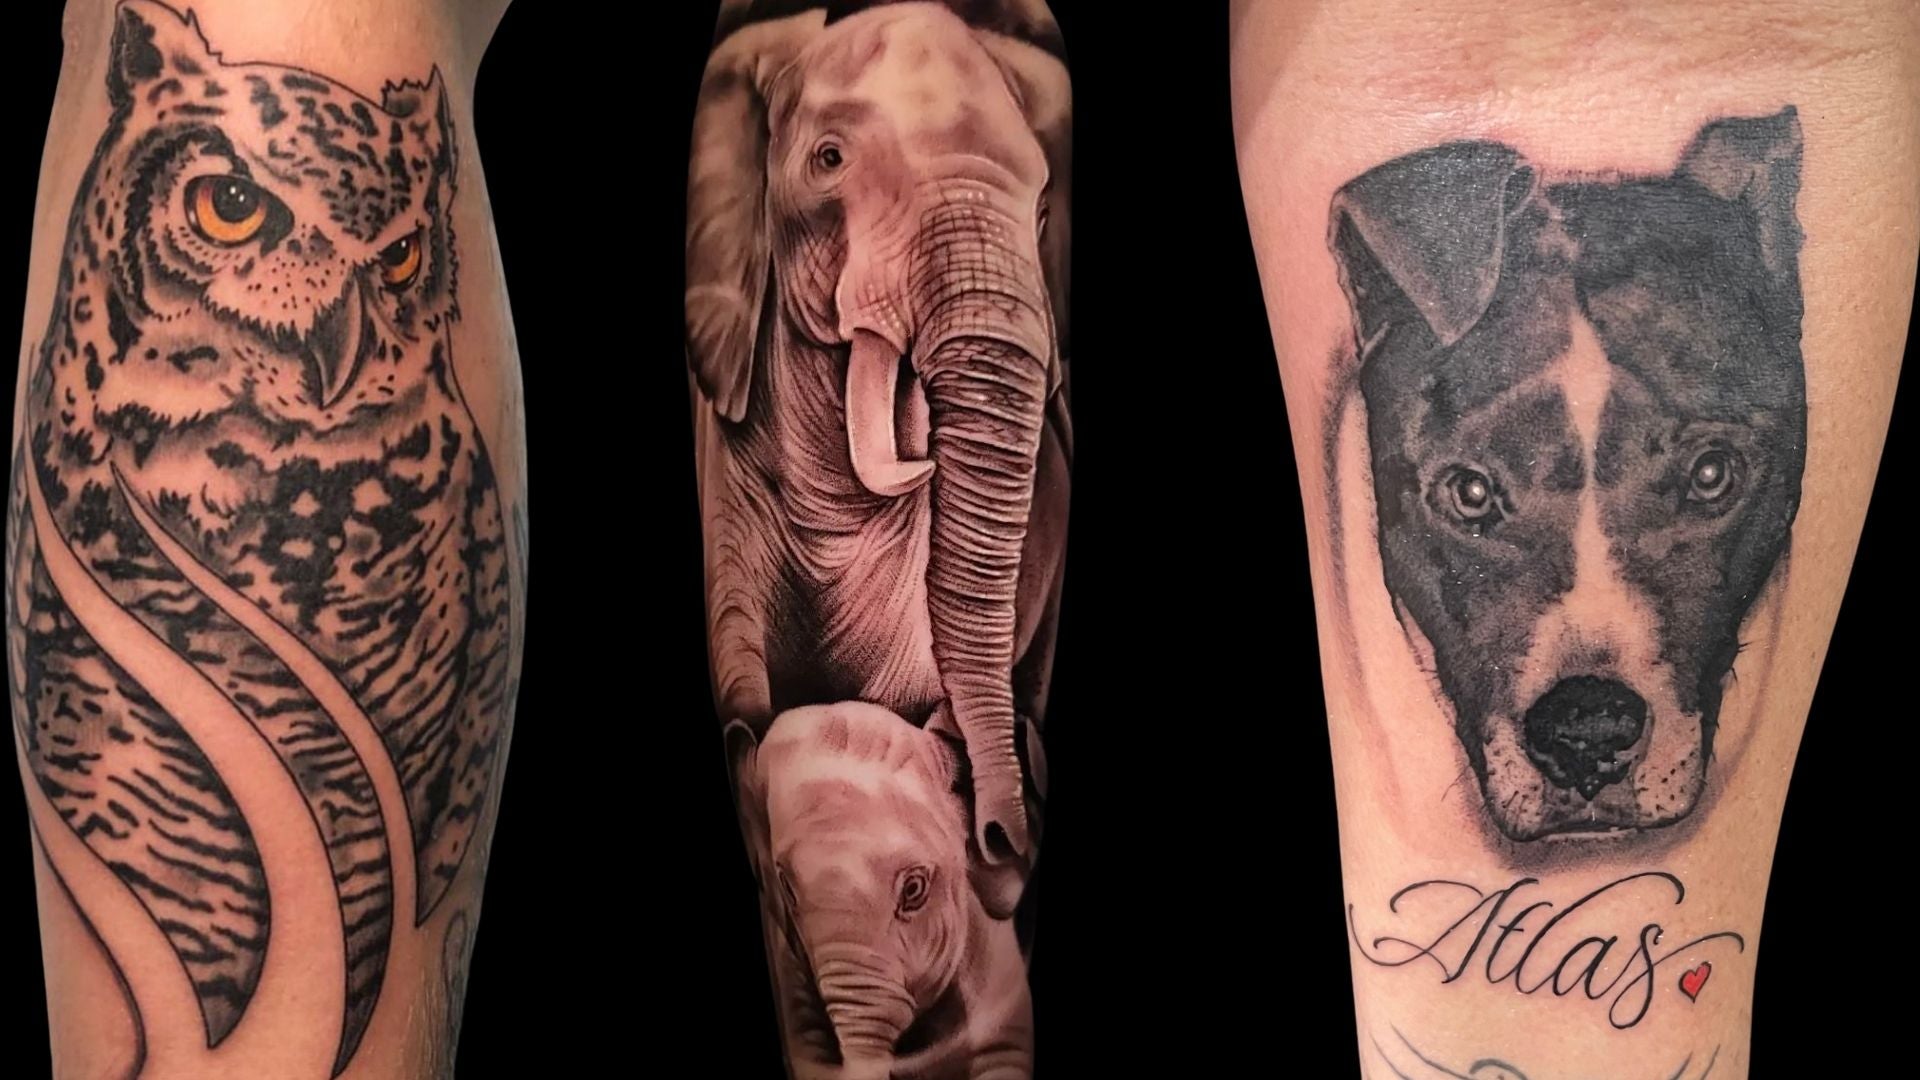 Amazing work by Ken ♣️ @deets.ink Club - Club Tattoo Mesa